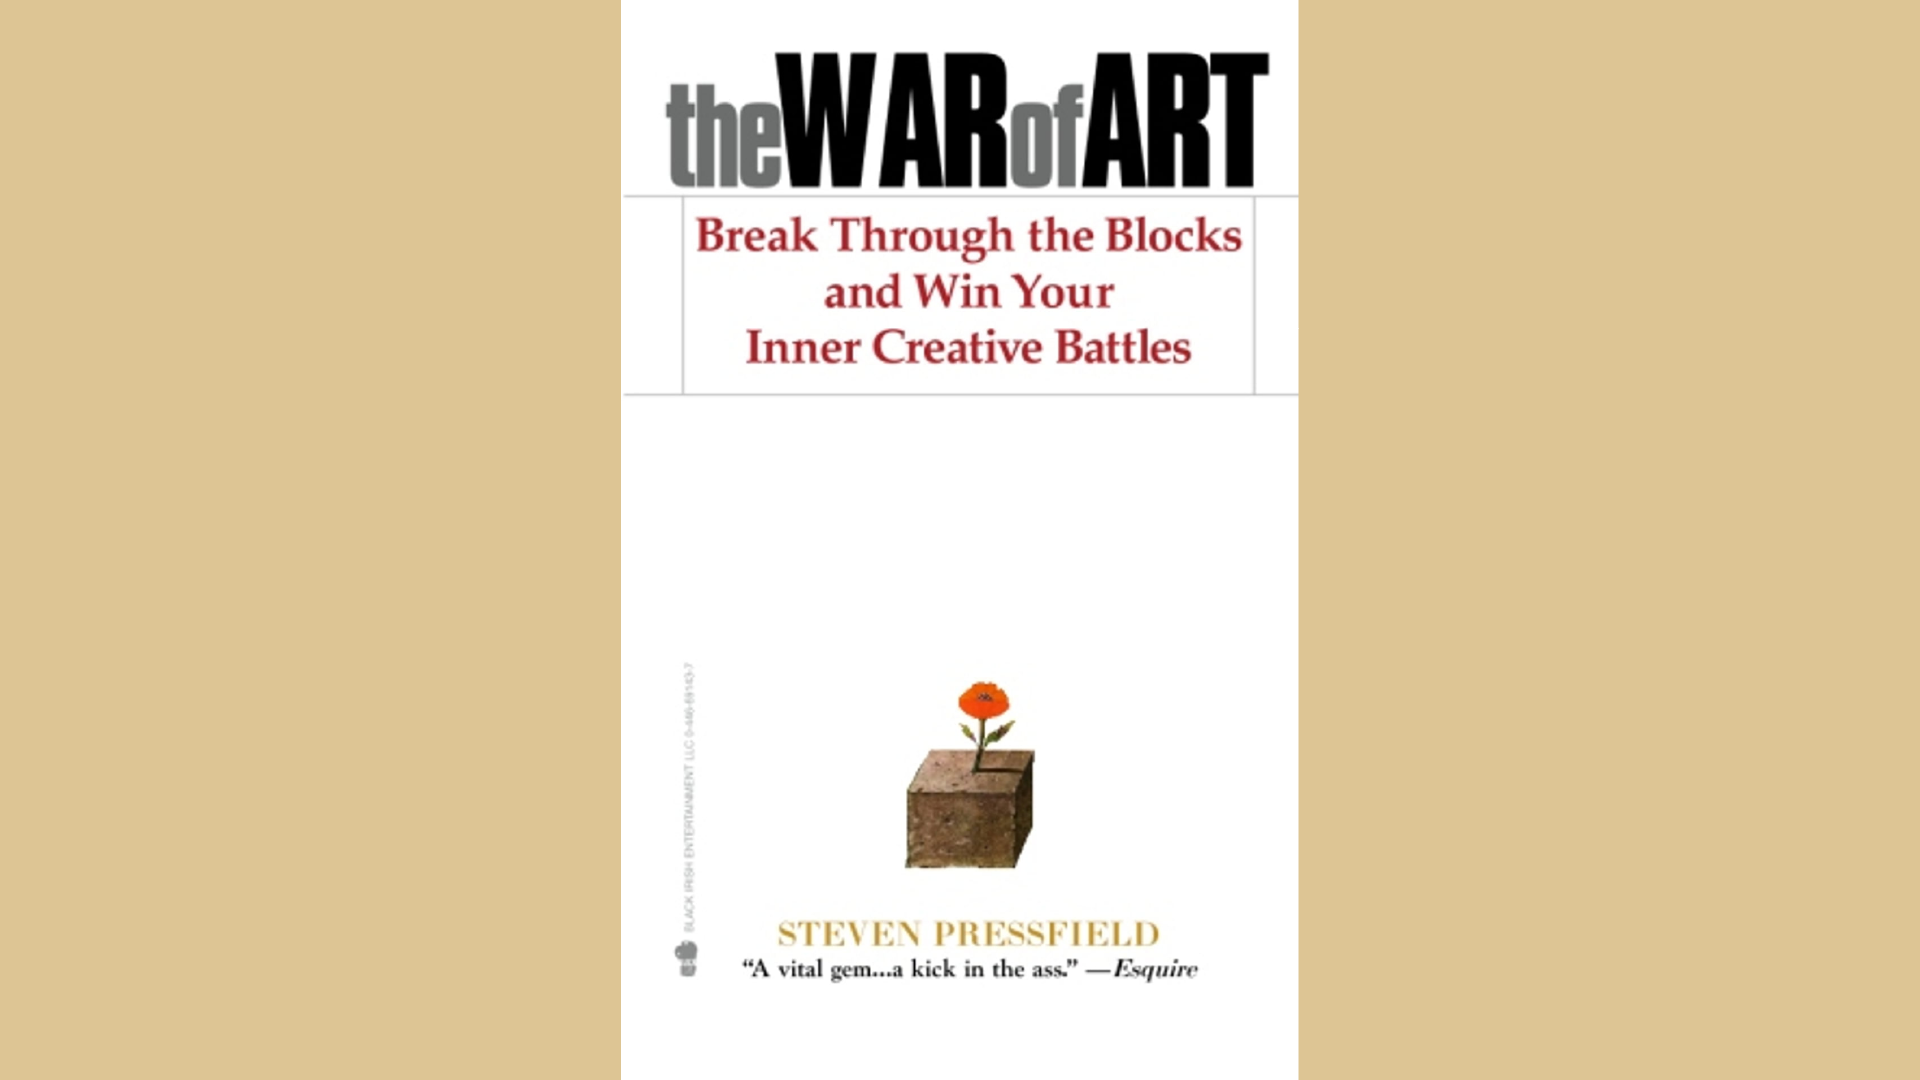 Summary: The War of Art by Steven Pressfield